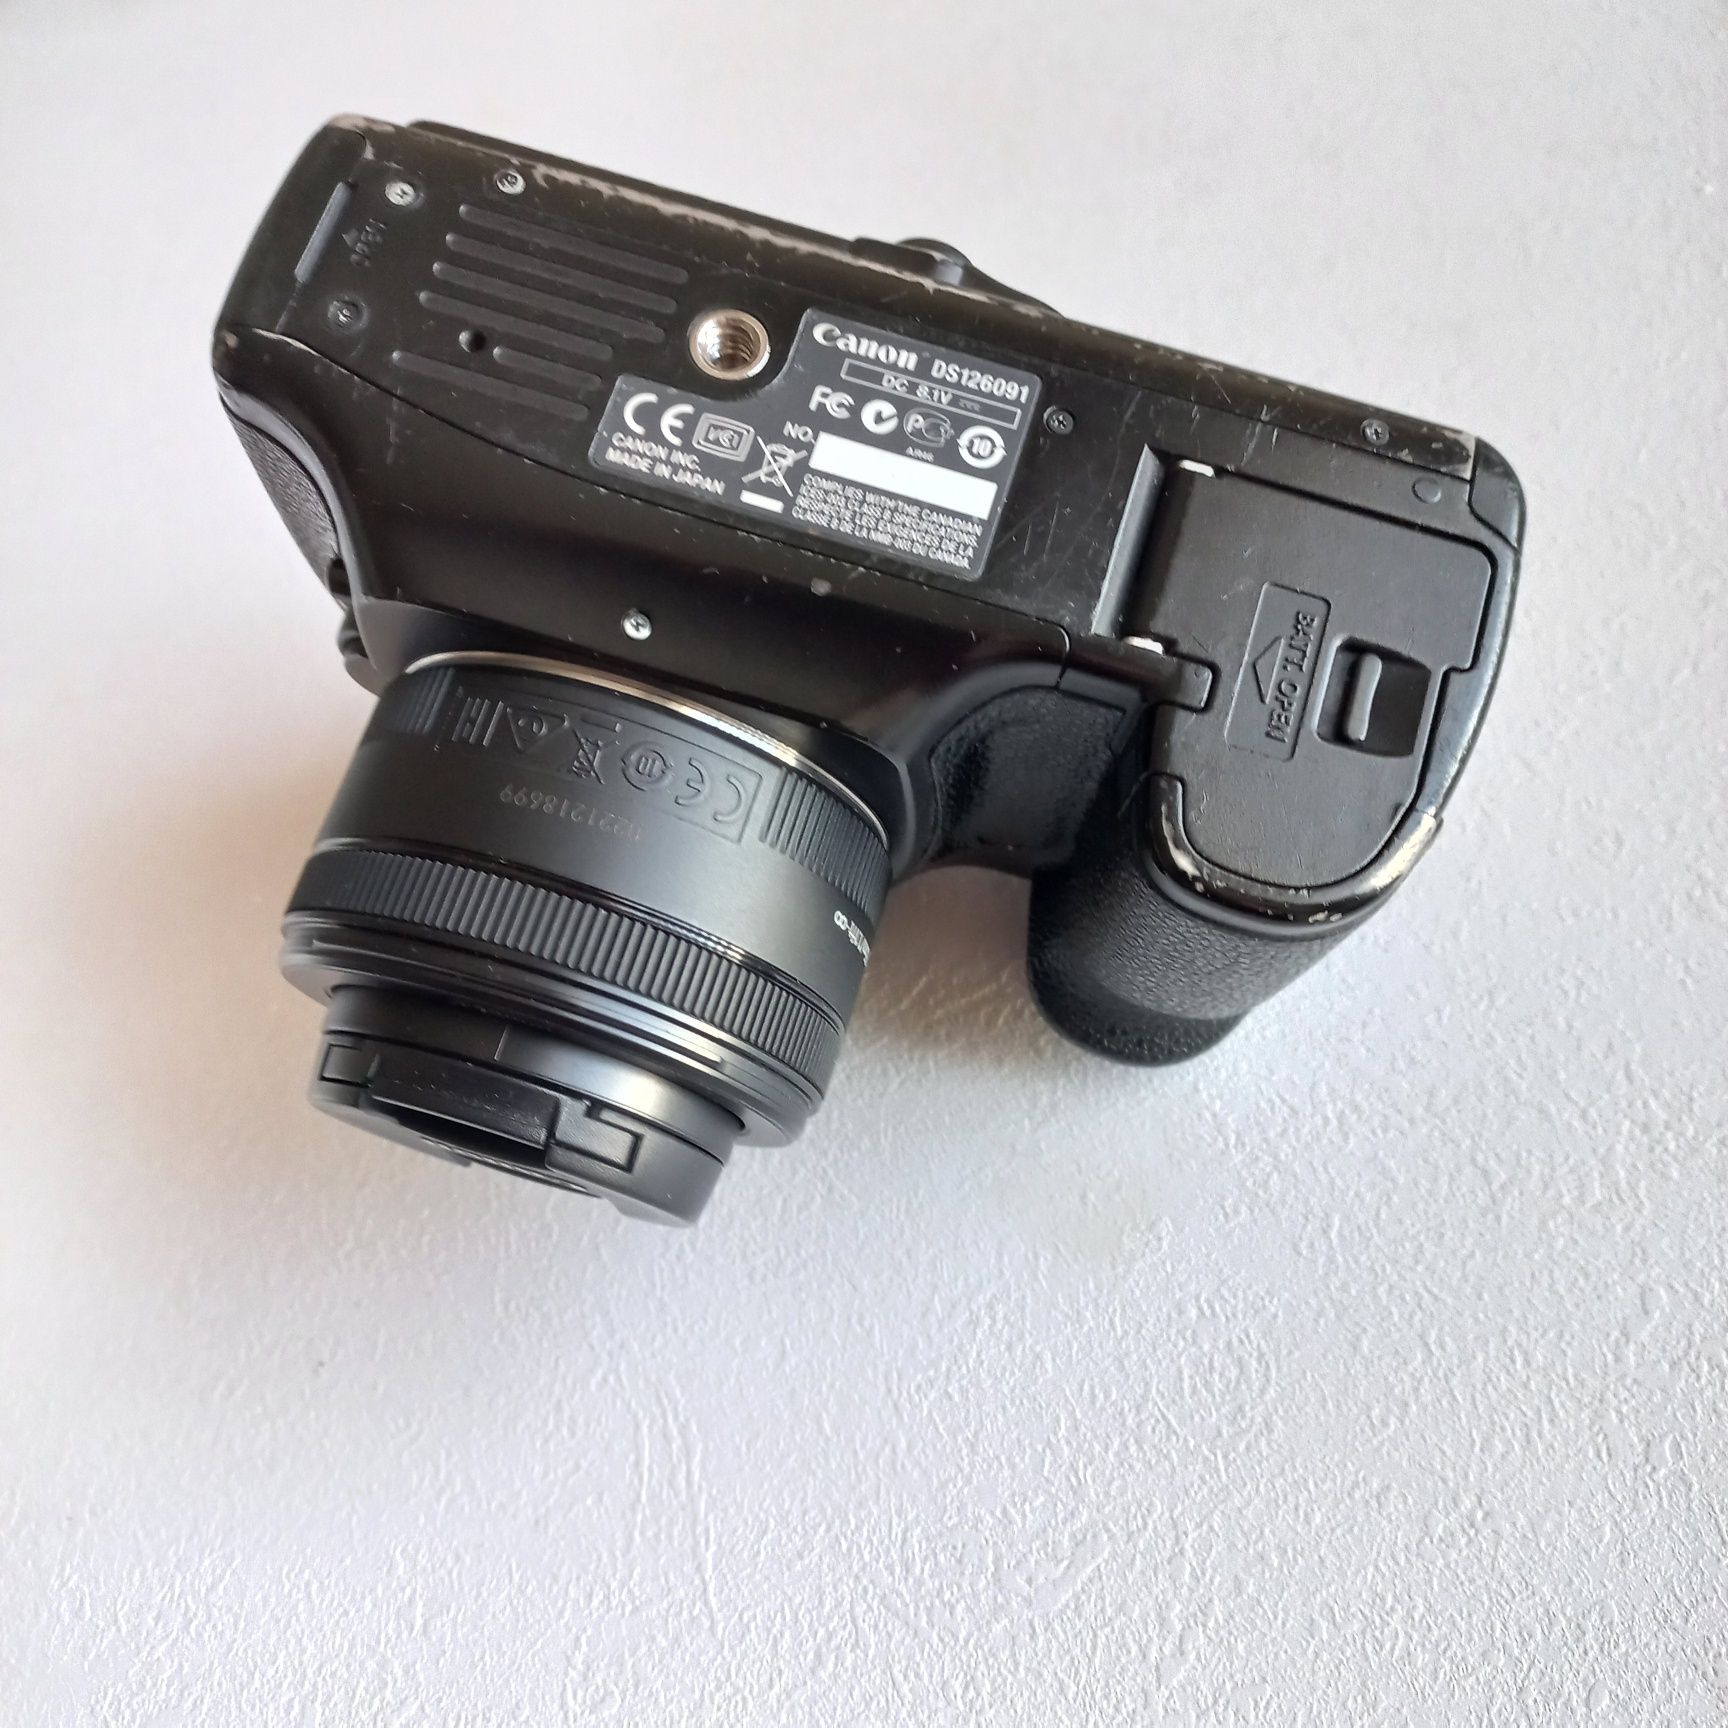 Canon 5d classic 50mm 1.8 stm